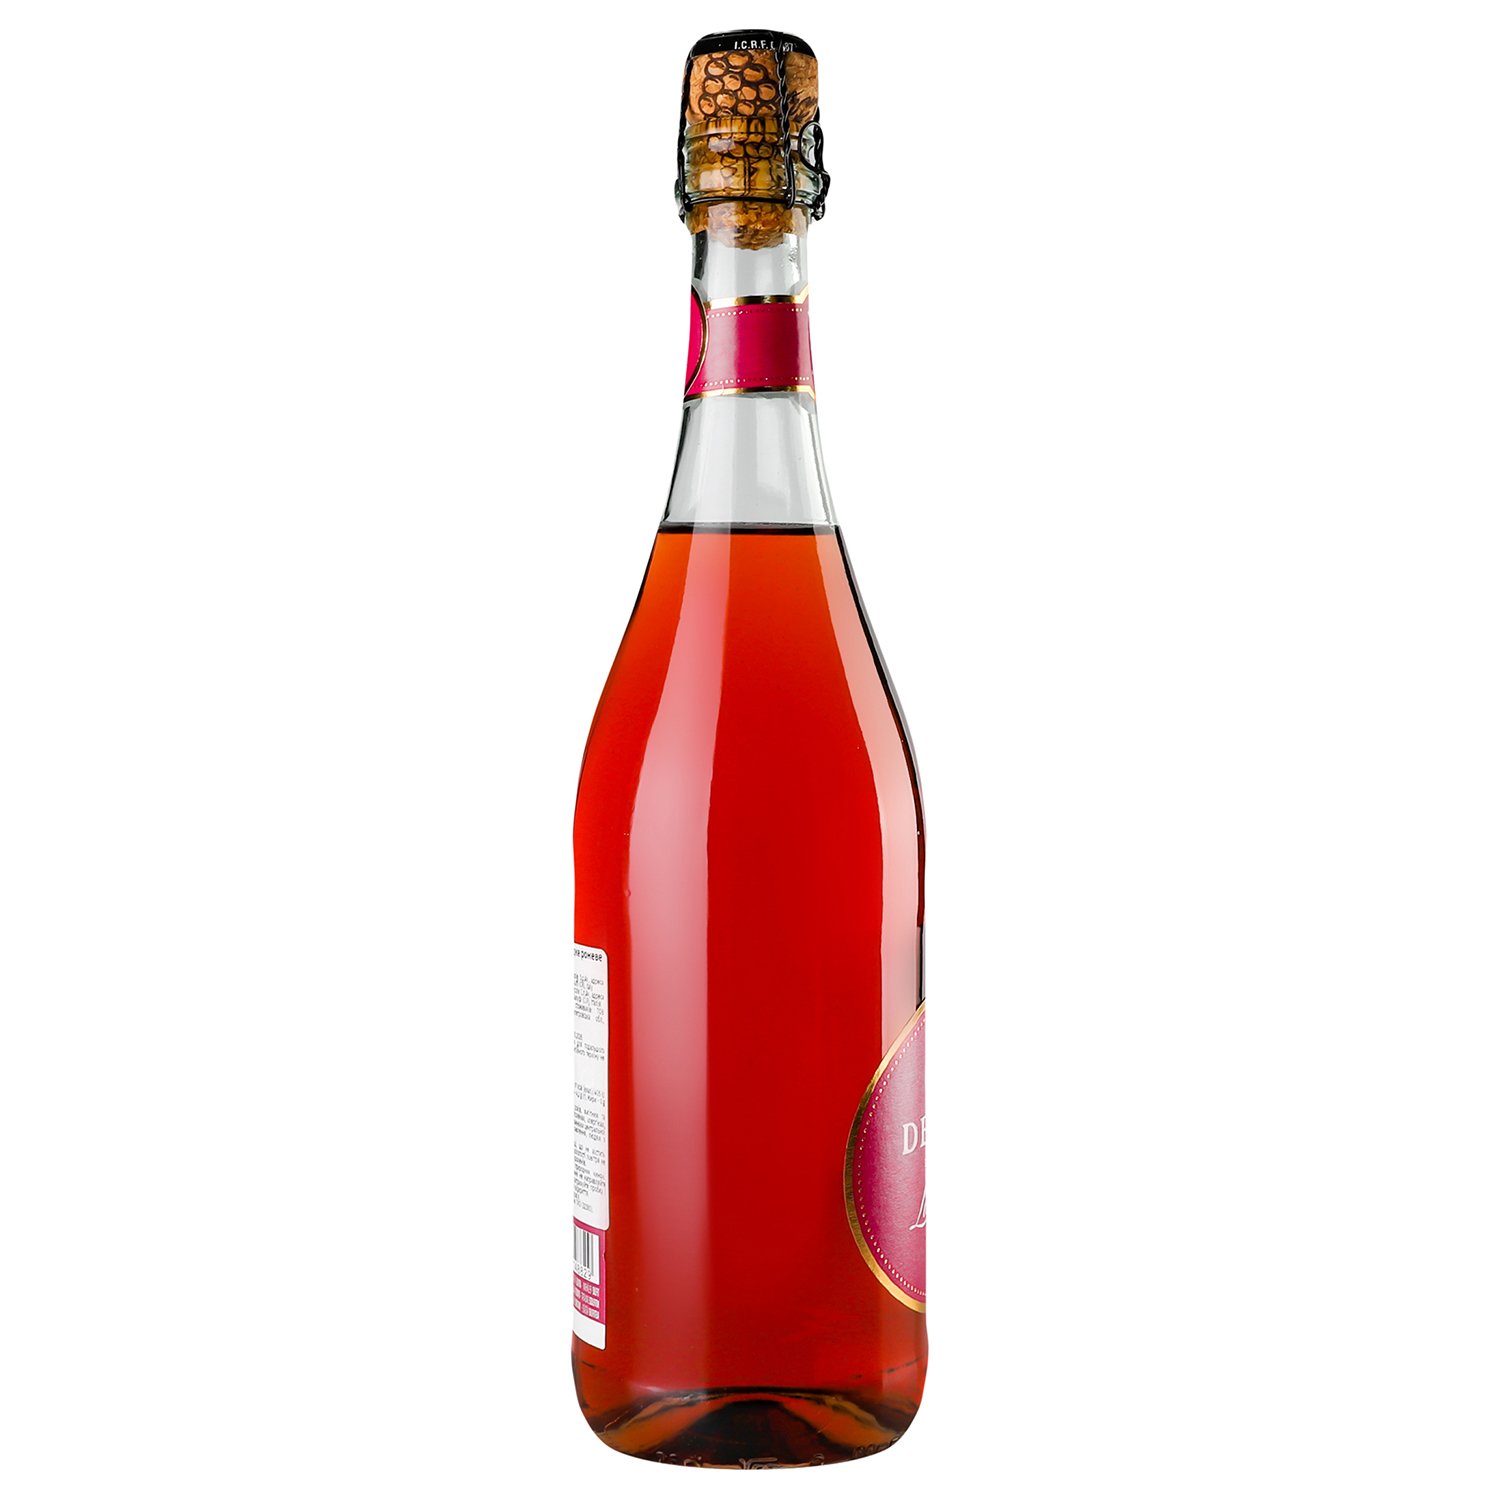 Вино игристое Decordi Lambrusco Rosato Amabile, розовое, полусладкое, 8%, 0,75 л - фото 2